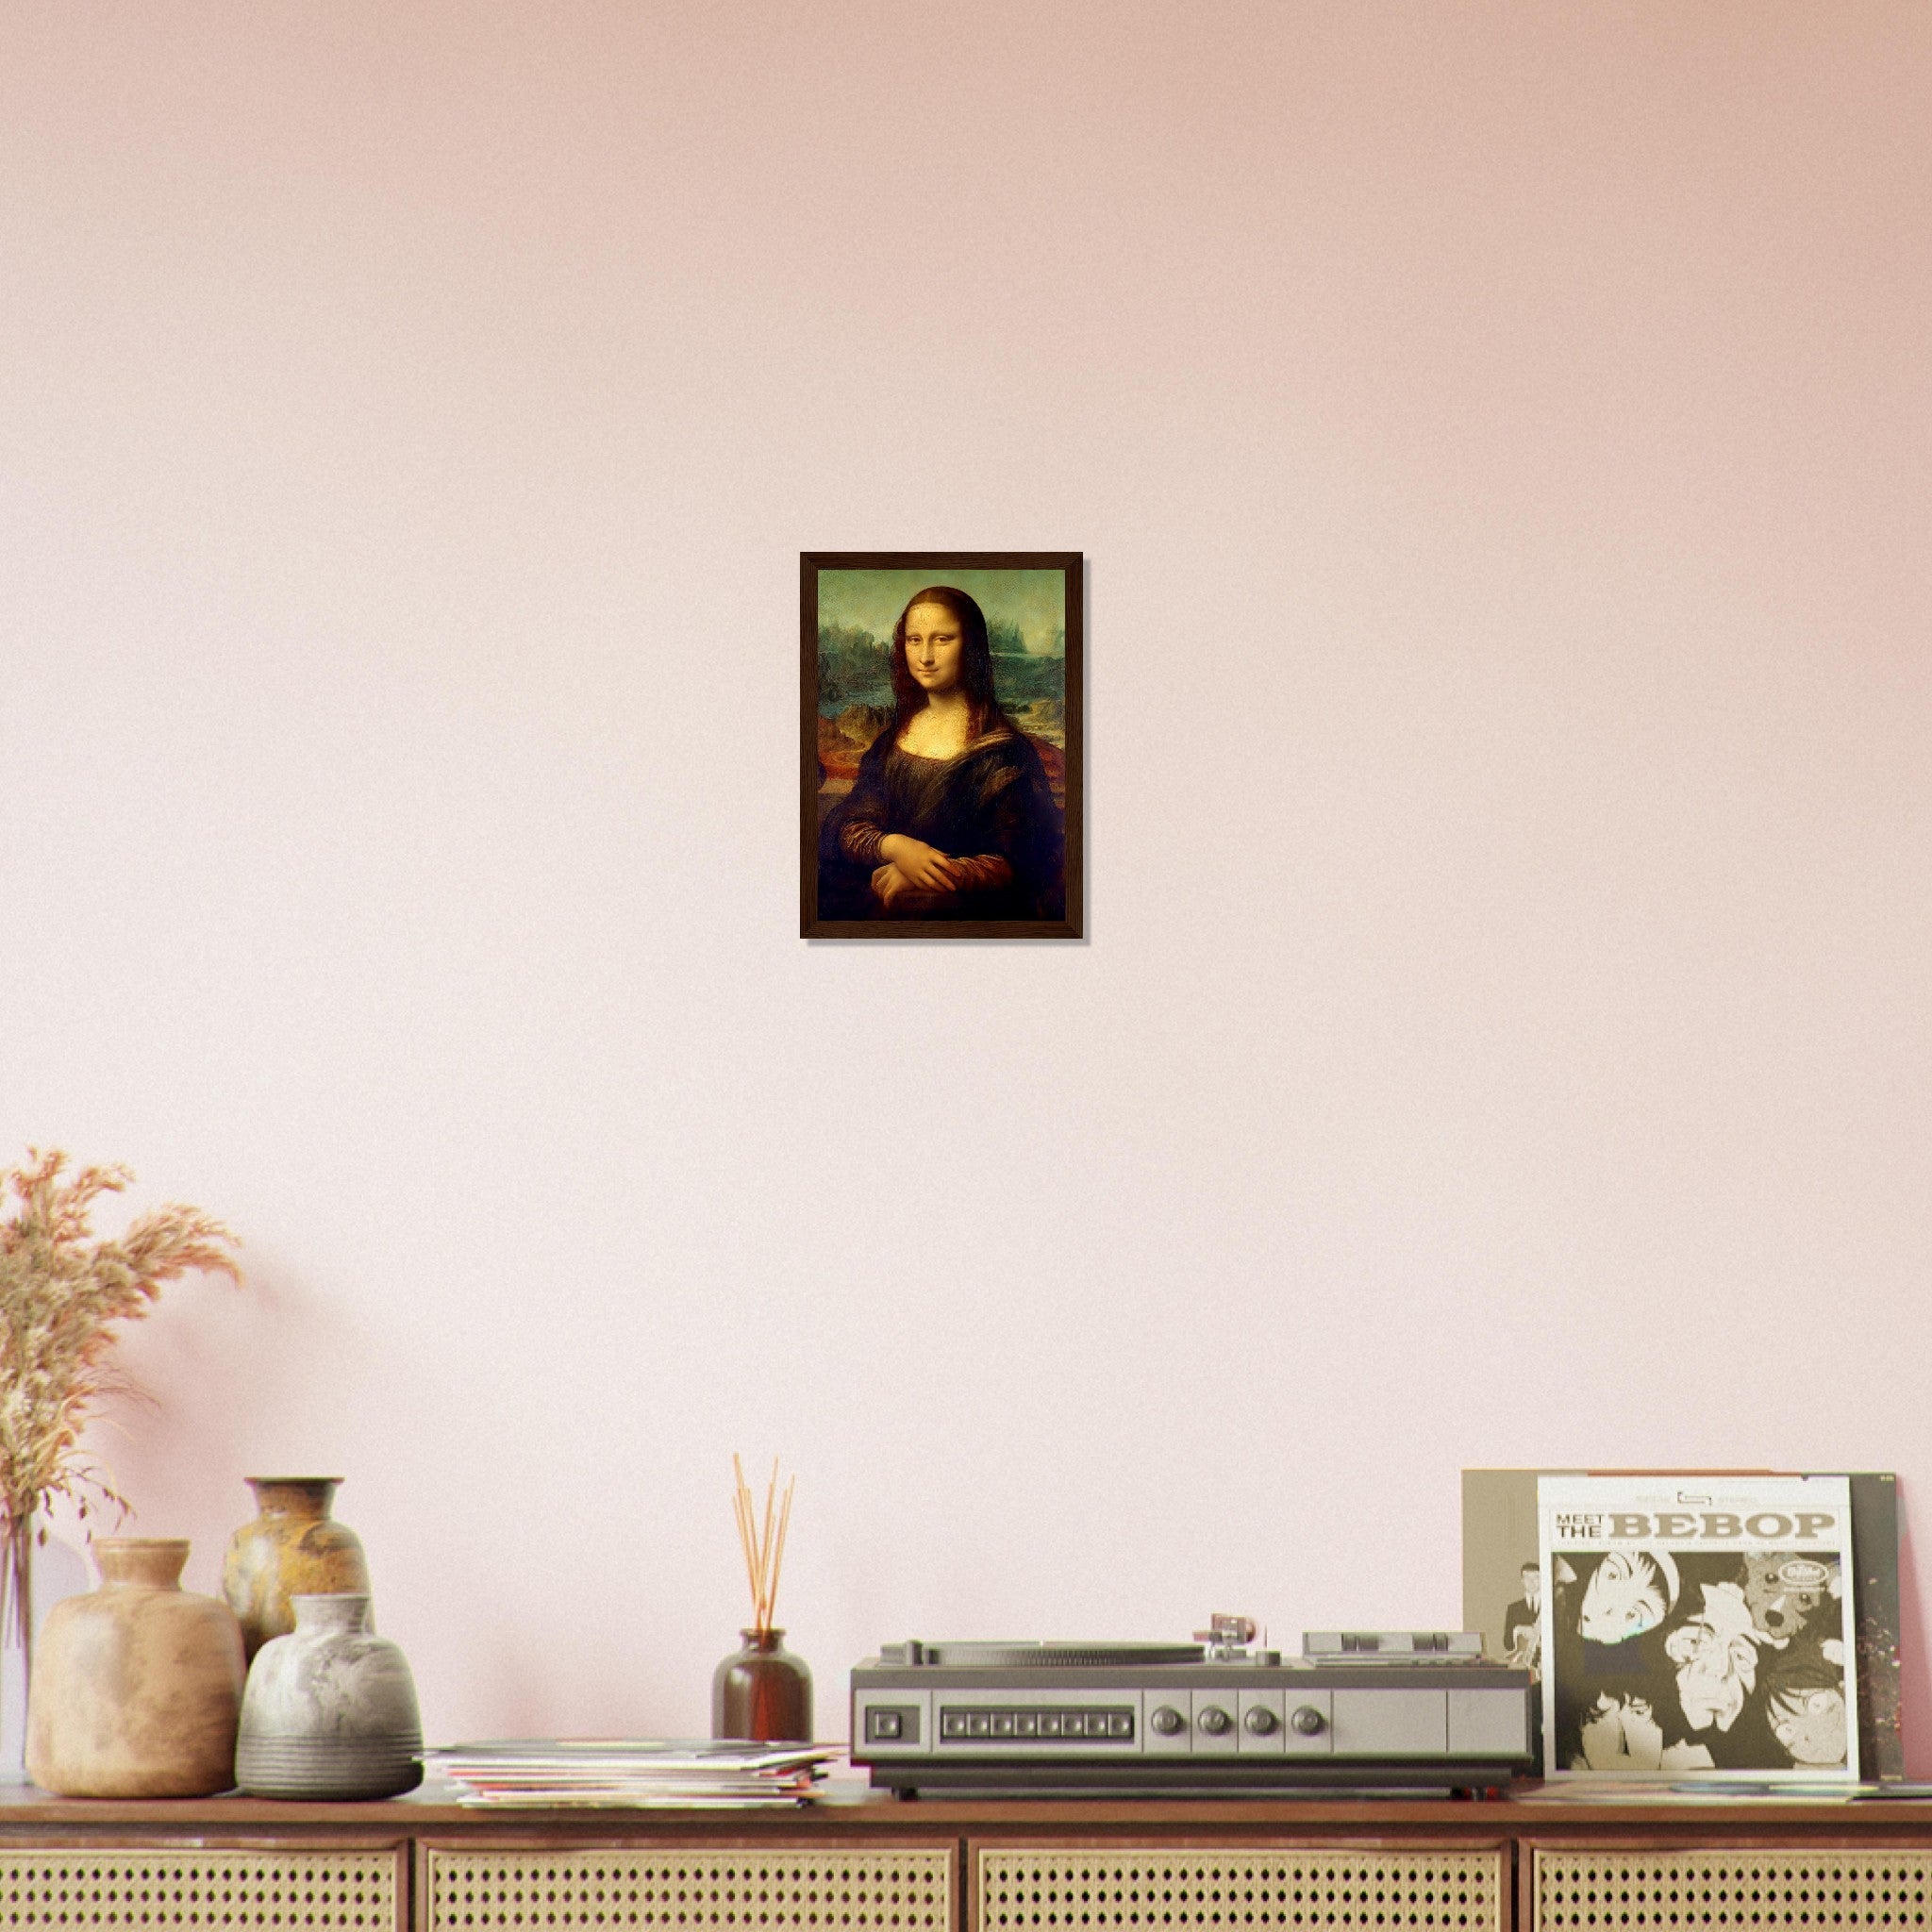 Mona Lisa Framed, Leonardo Da Vinci - Mona Lisa Framed Print - ReFramed Print - WallArtPrints4U